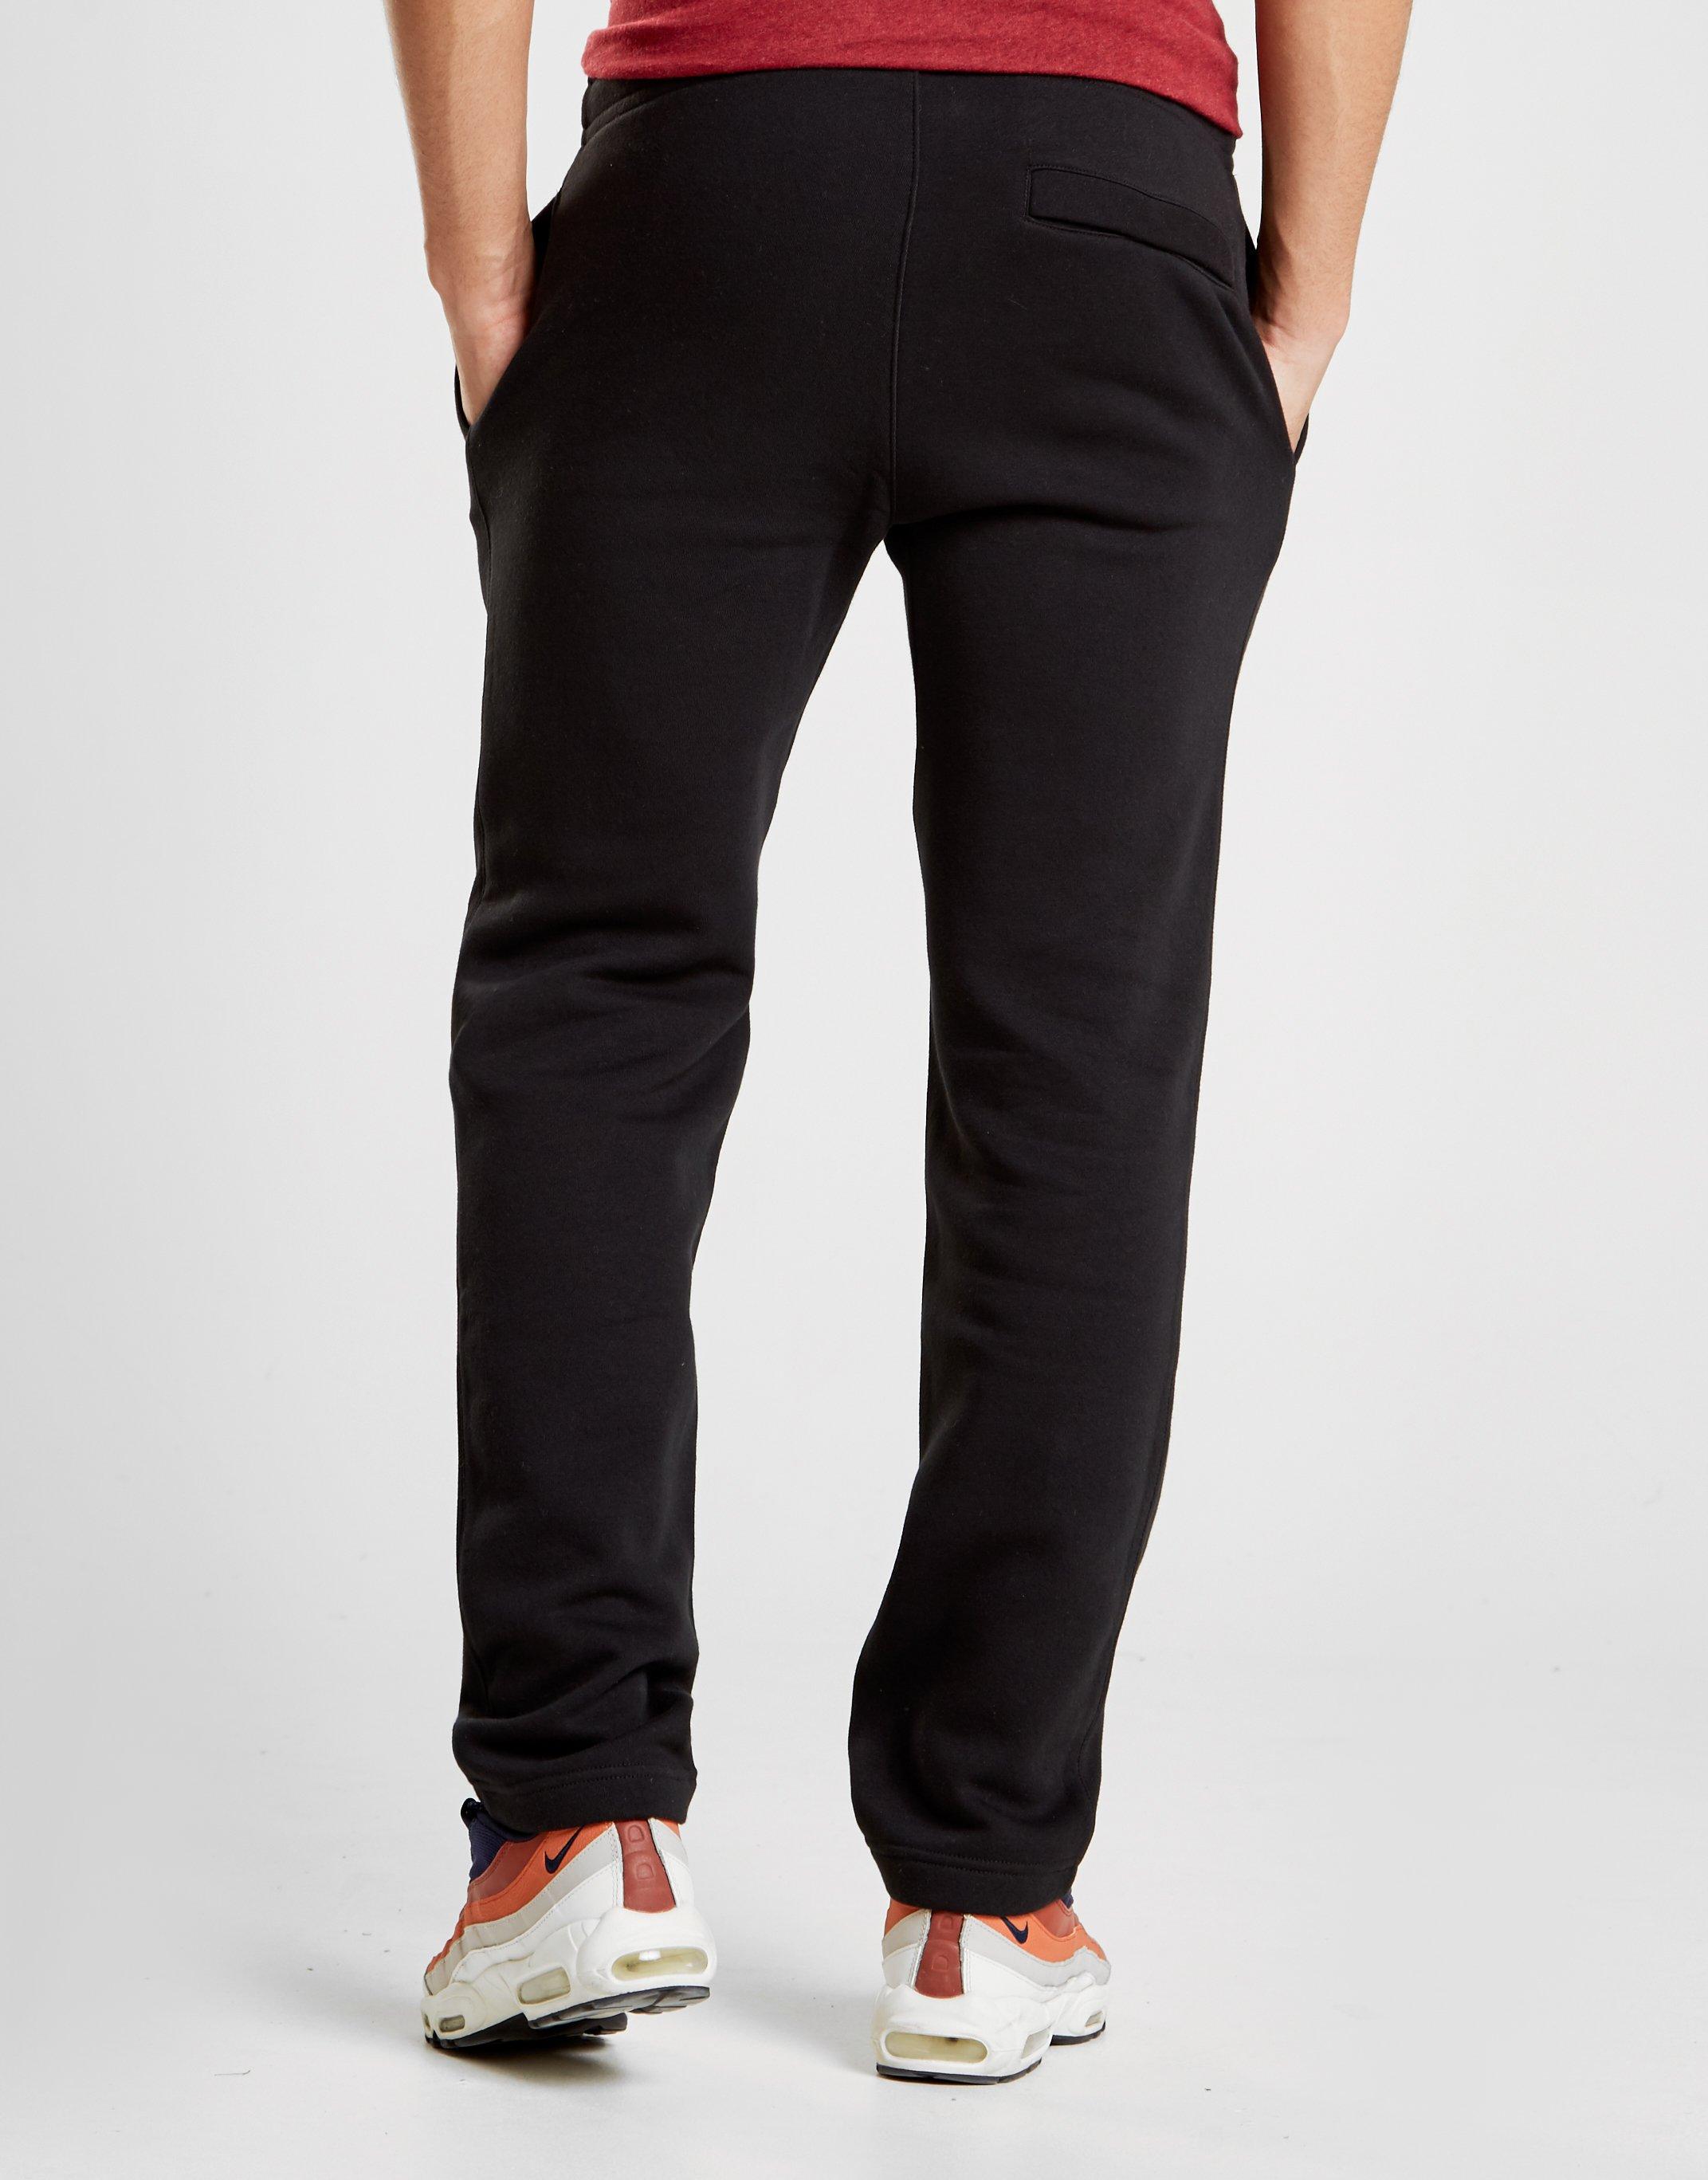 Nike Foundation Fleece Track Pants in Black for Men - Lyst